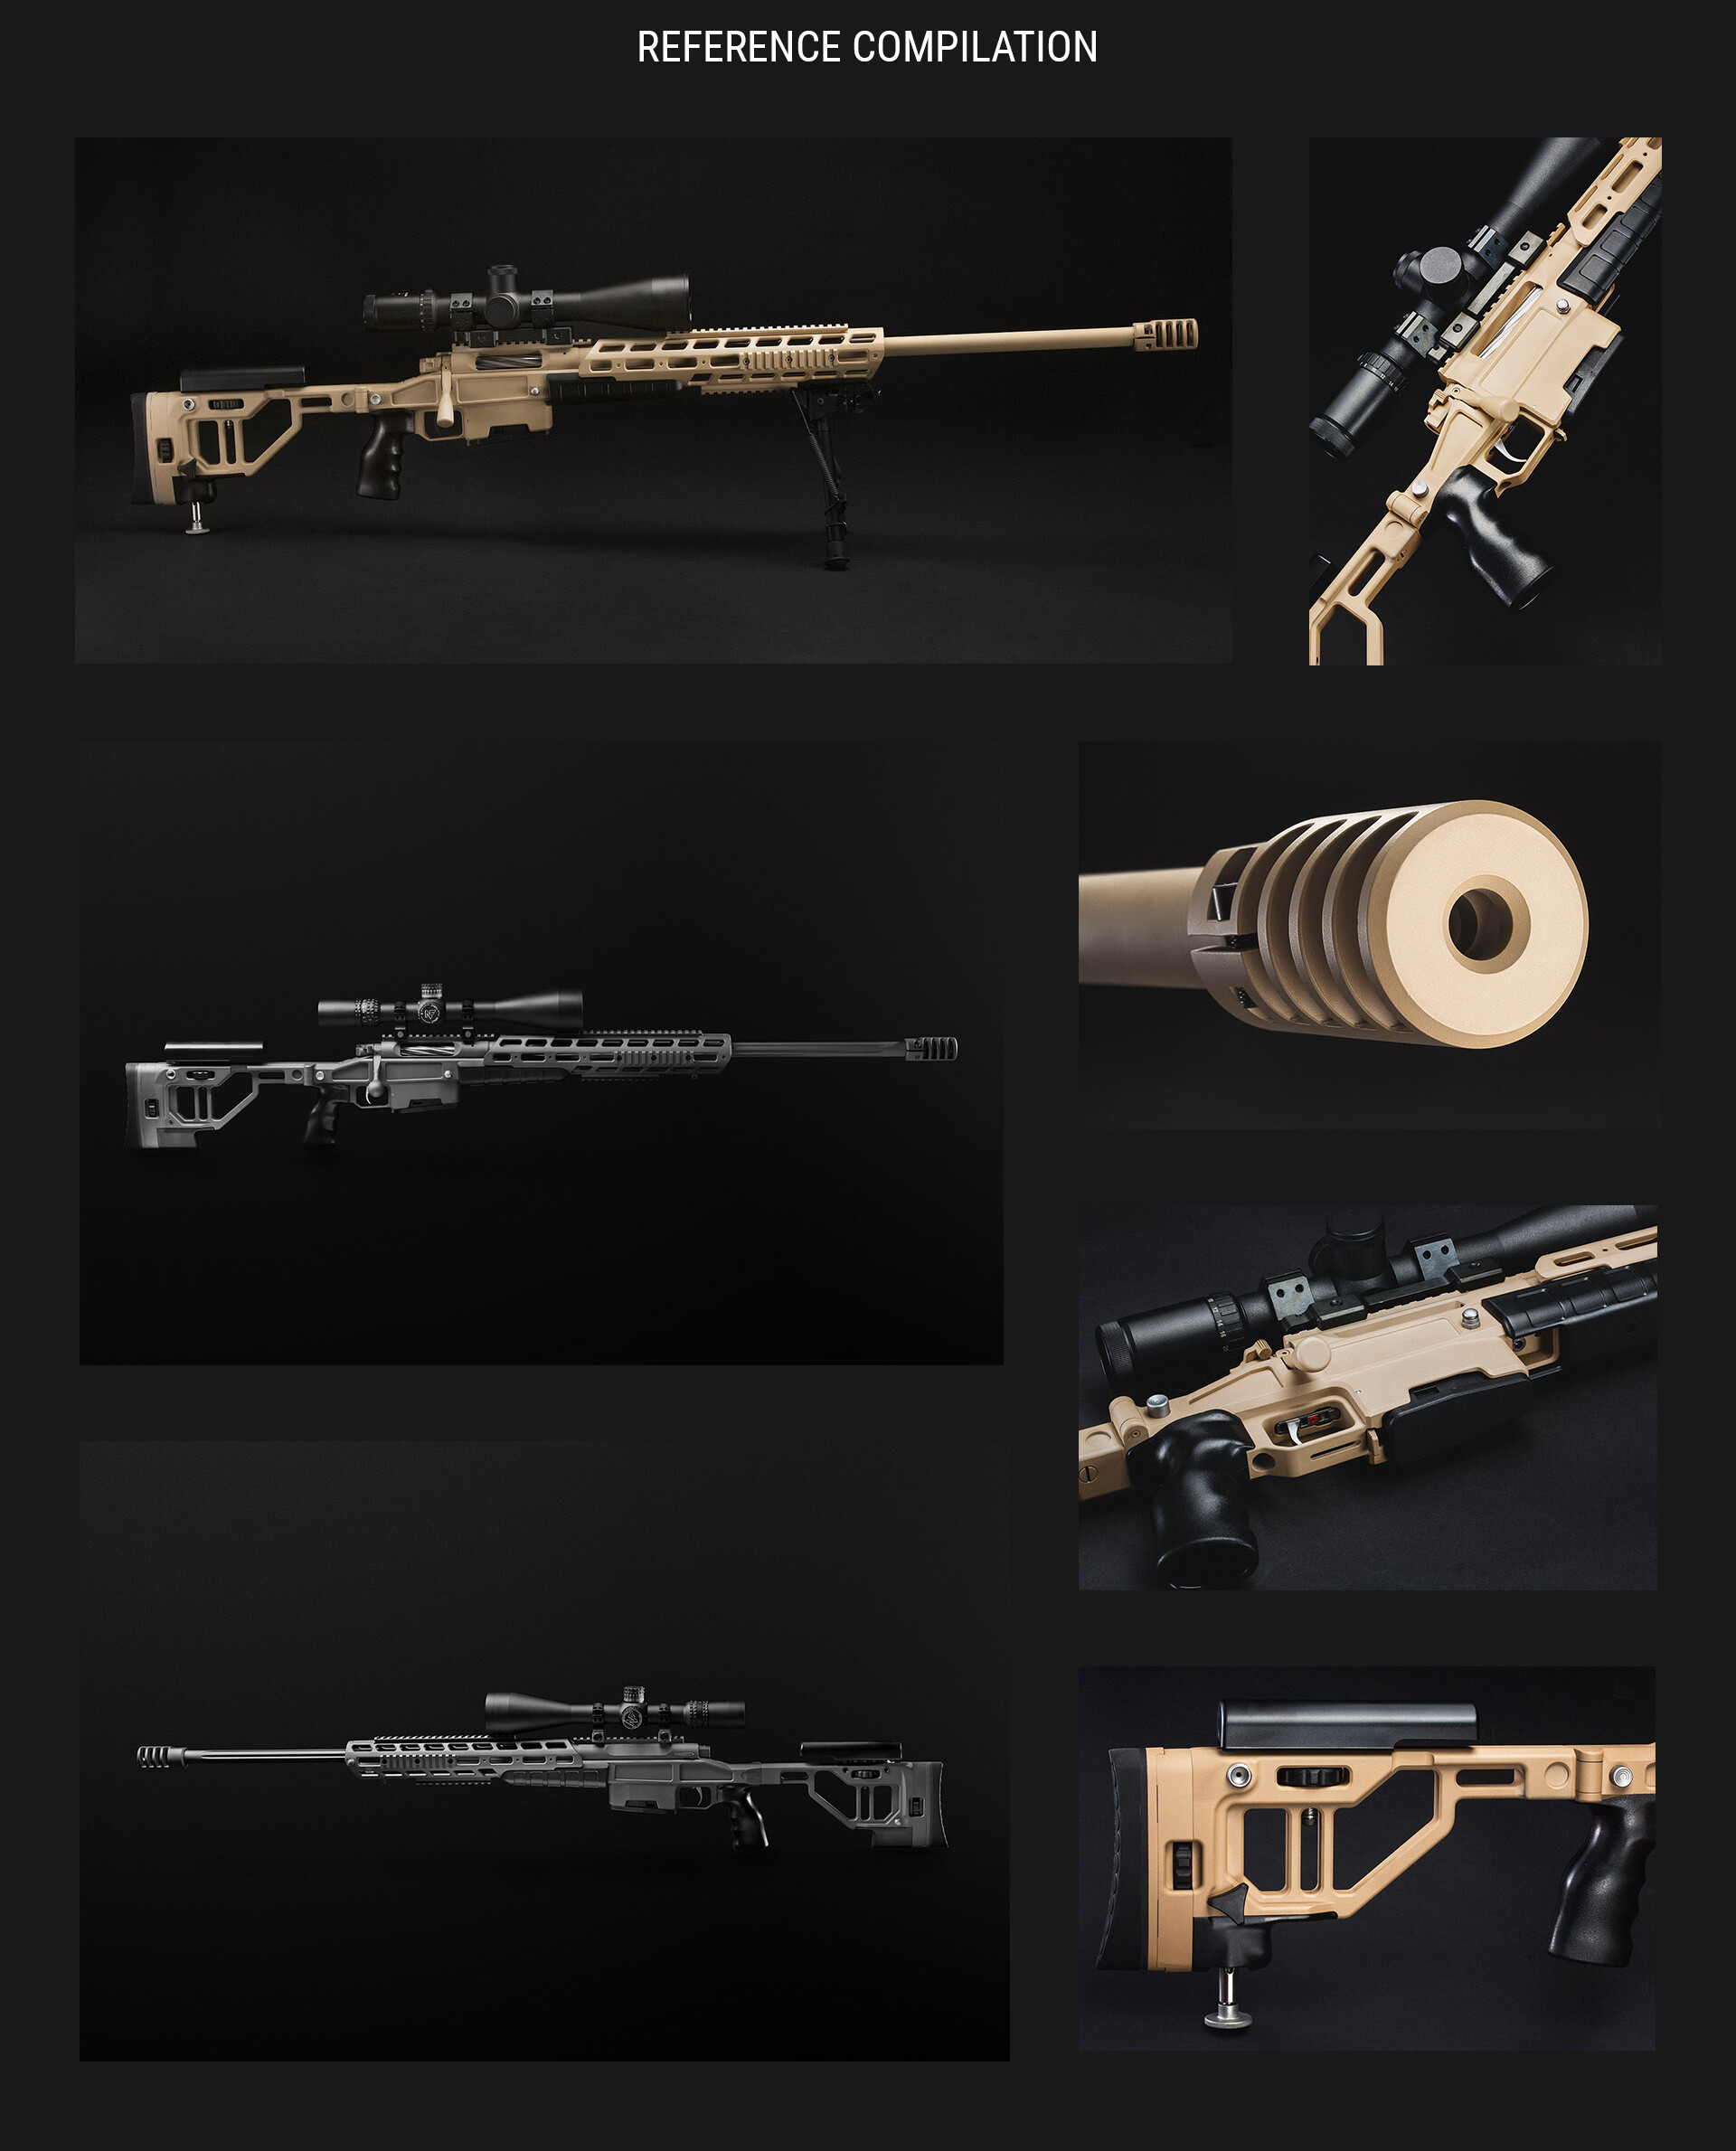 Sniper Compilation